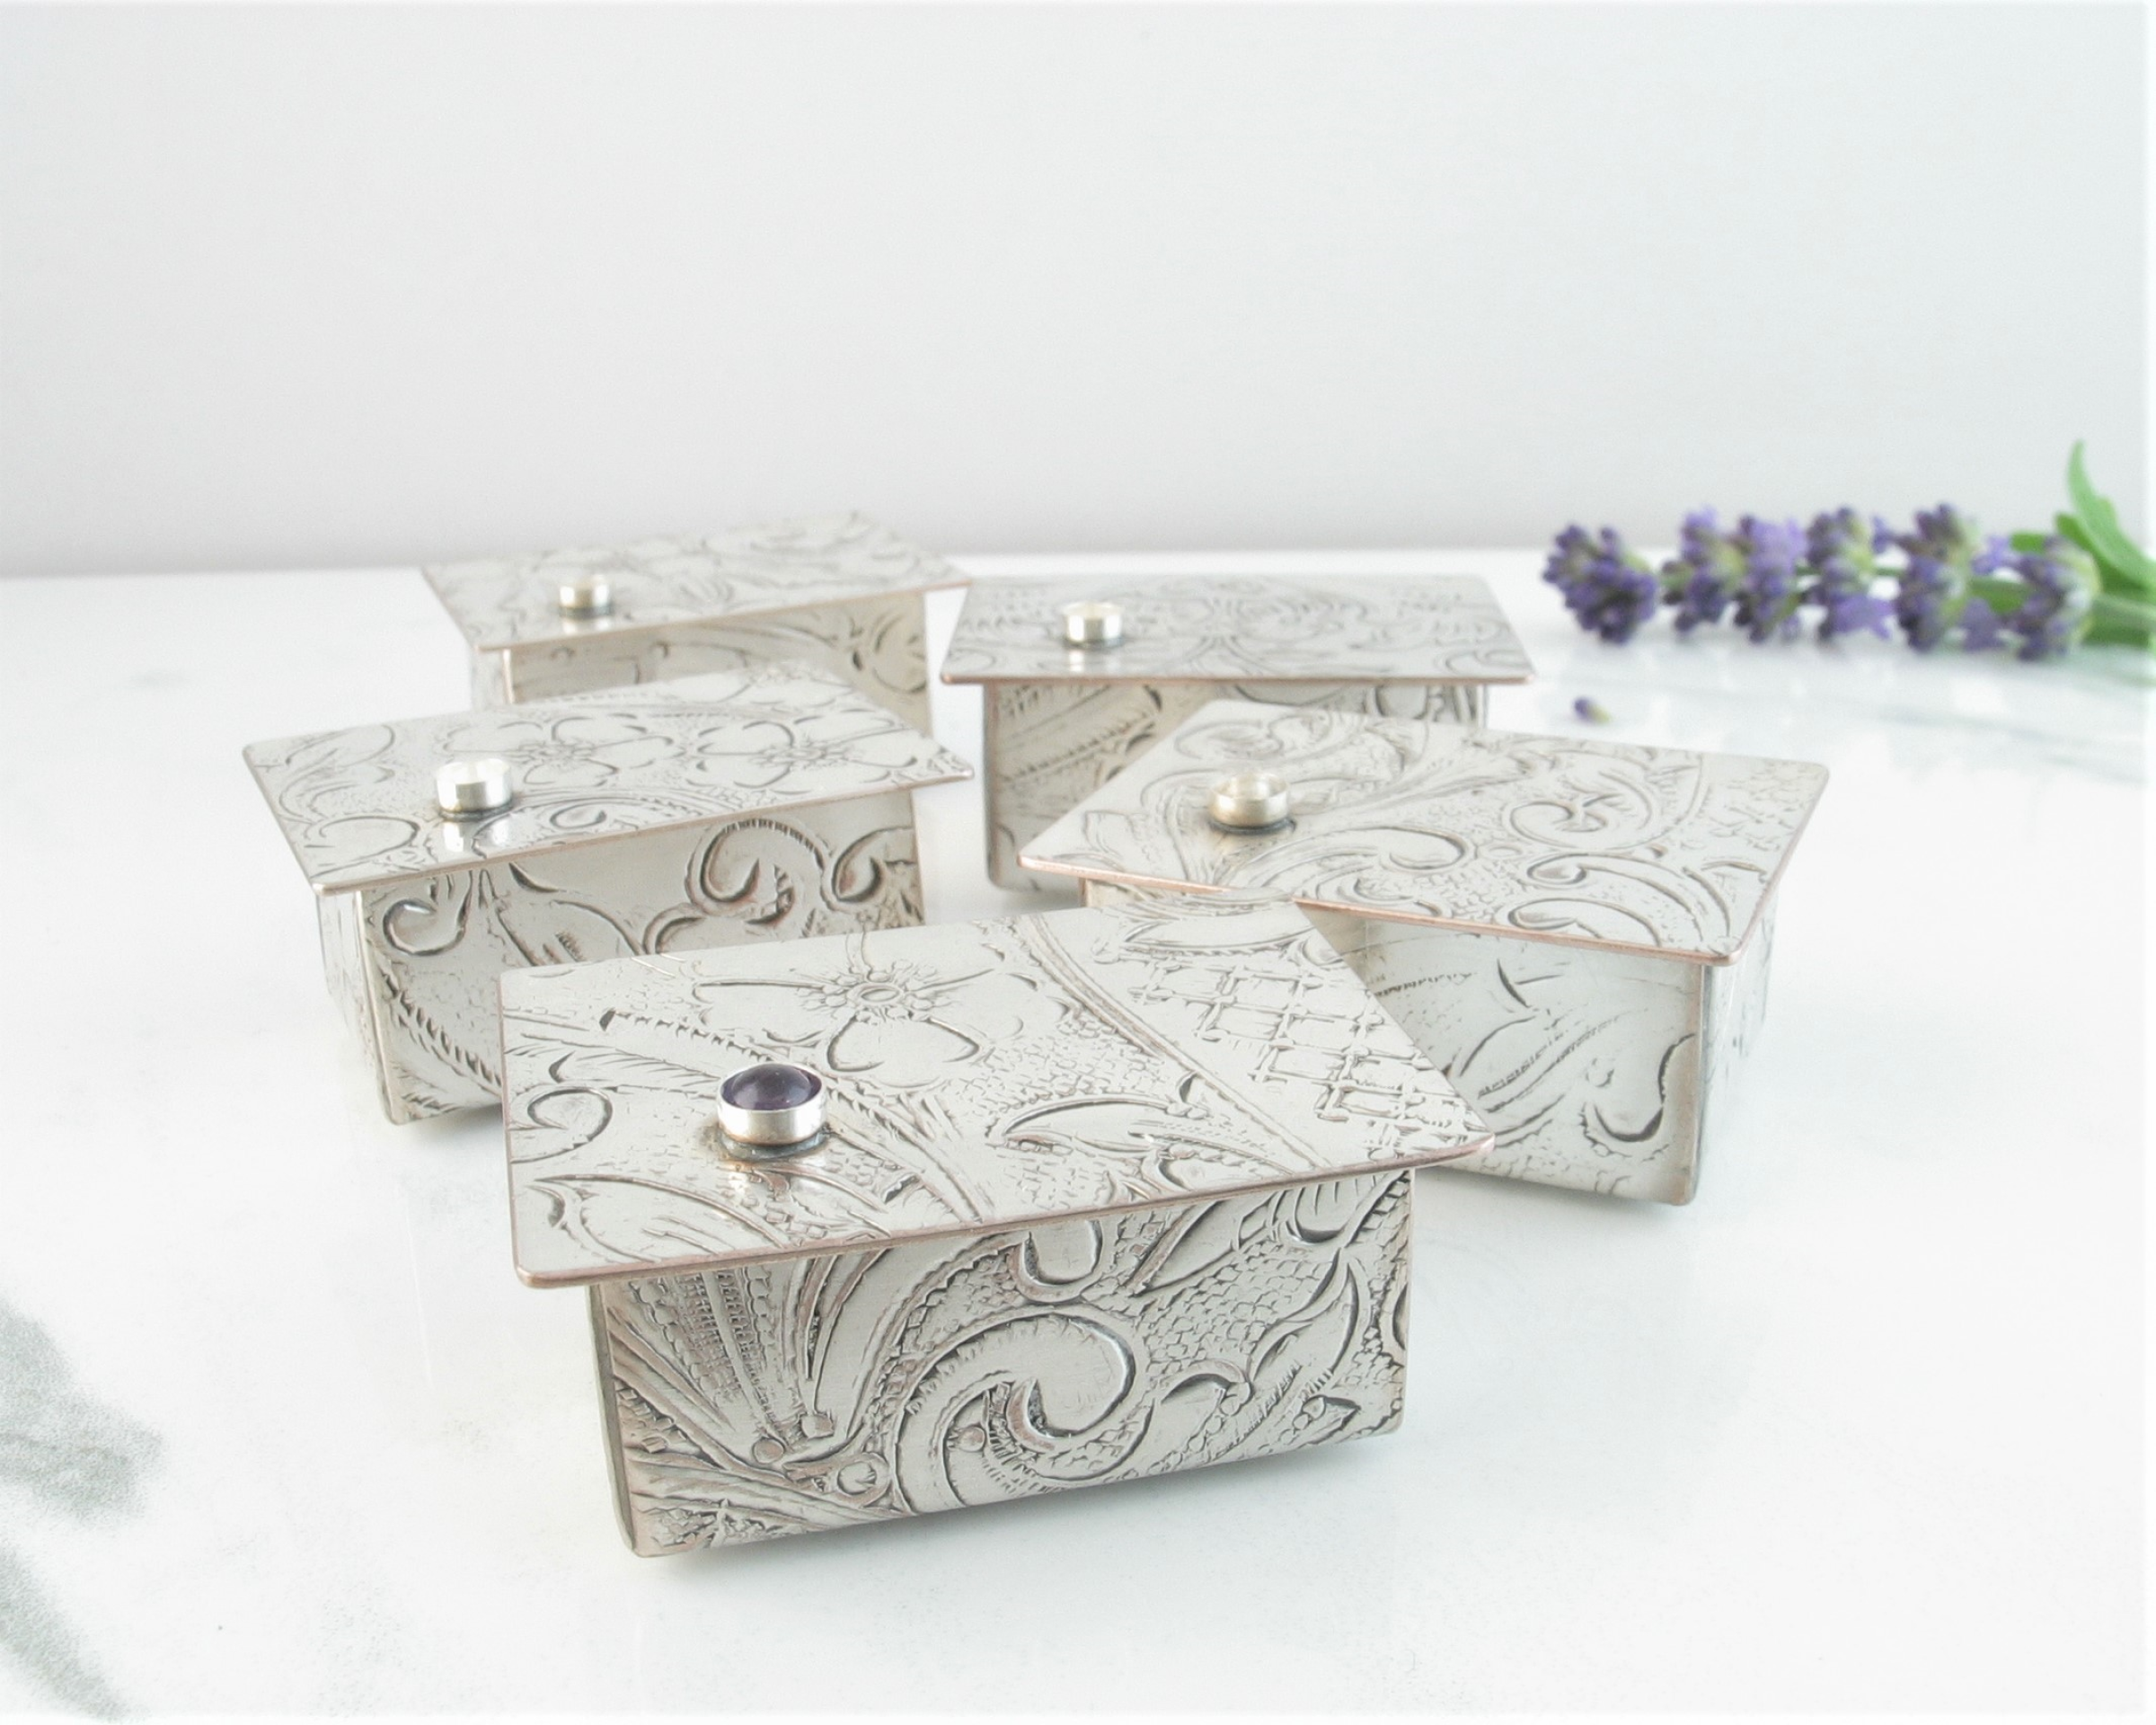 Miniature Silver Trinket Box with Tourmaline gemstone